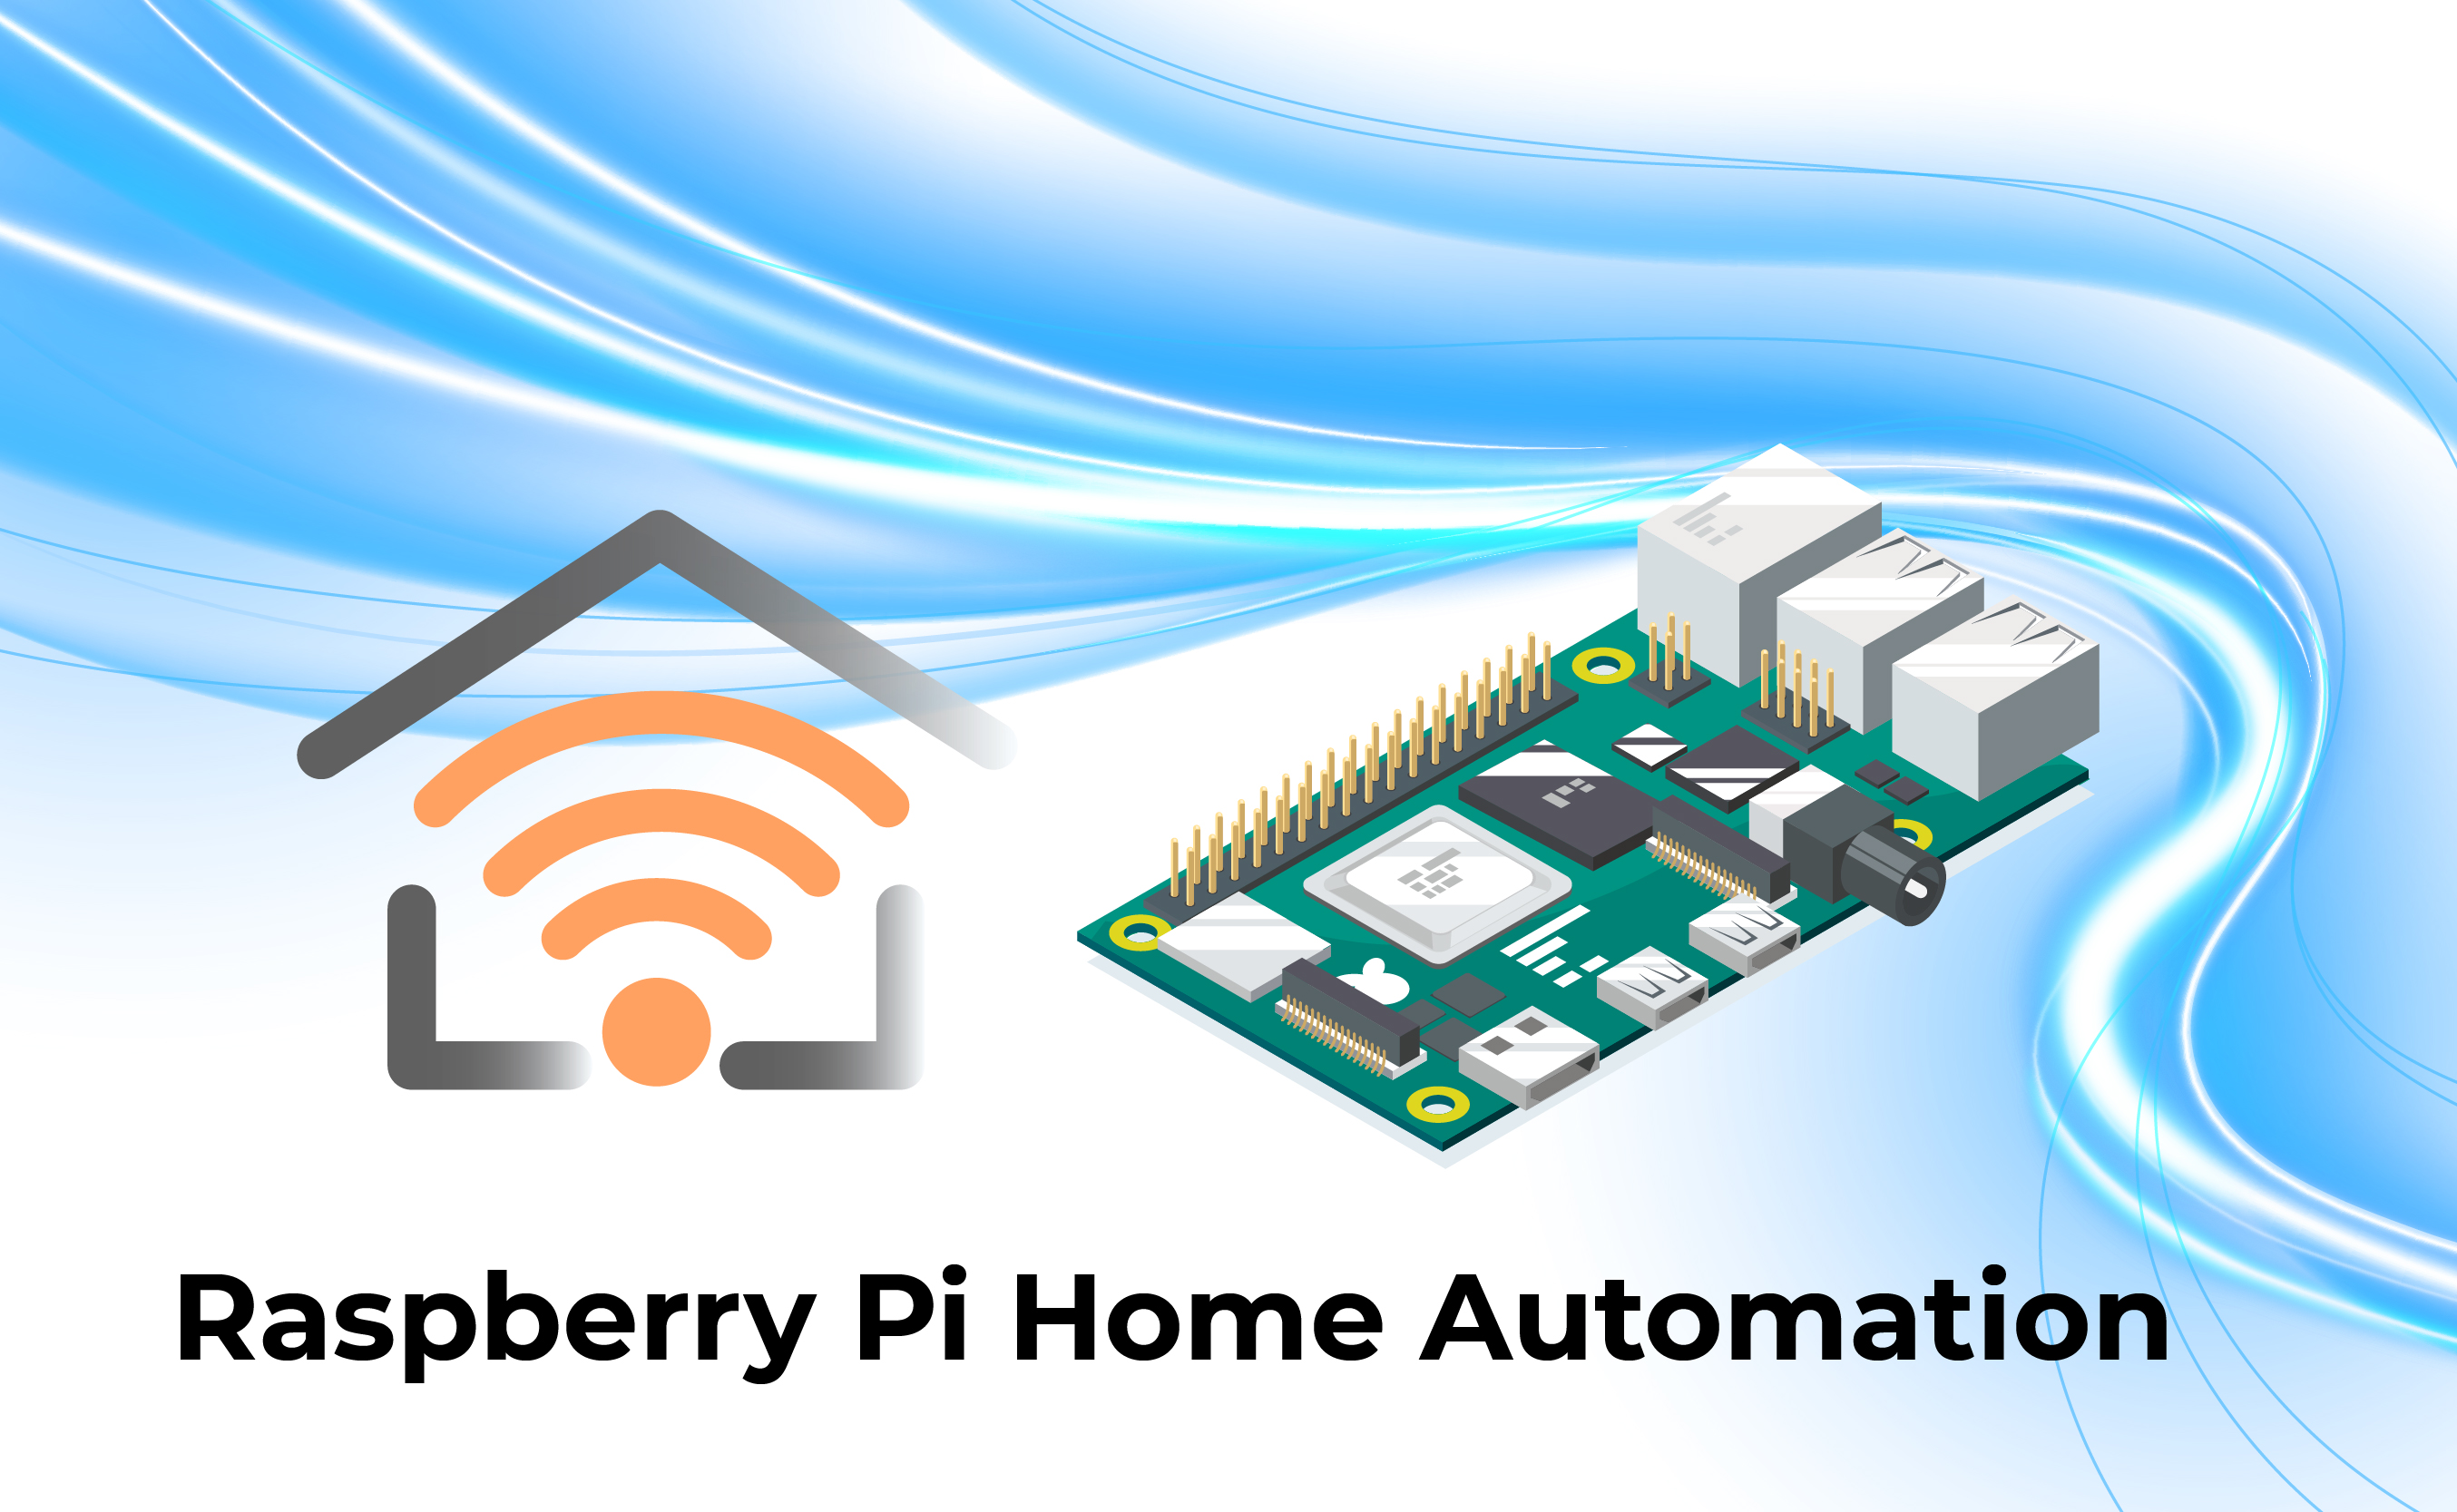 Raspberry Pi Home Automation: a Smarter Home